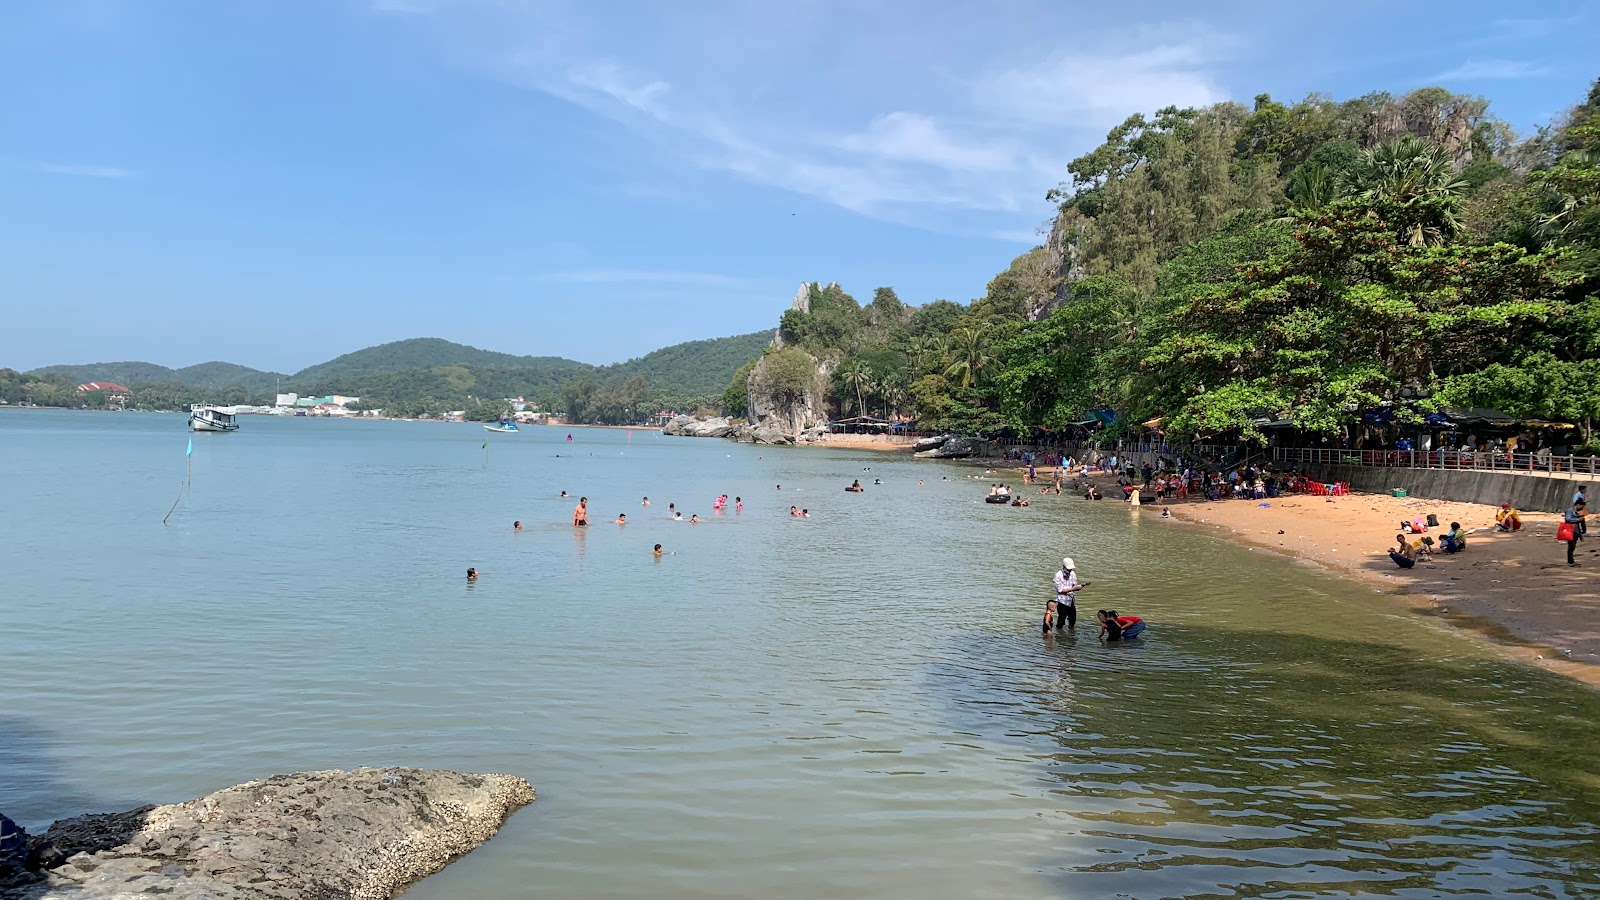 Gieng Tien Beach'in fotoğrafı geniş plaj ile birlikte